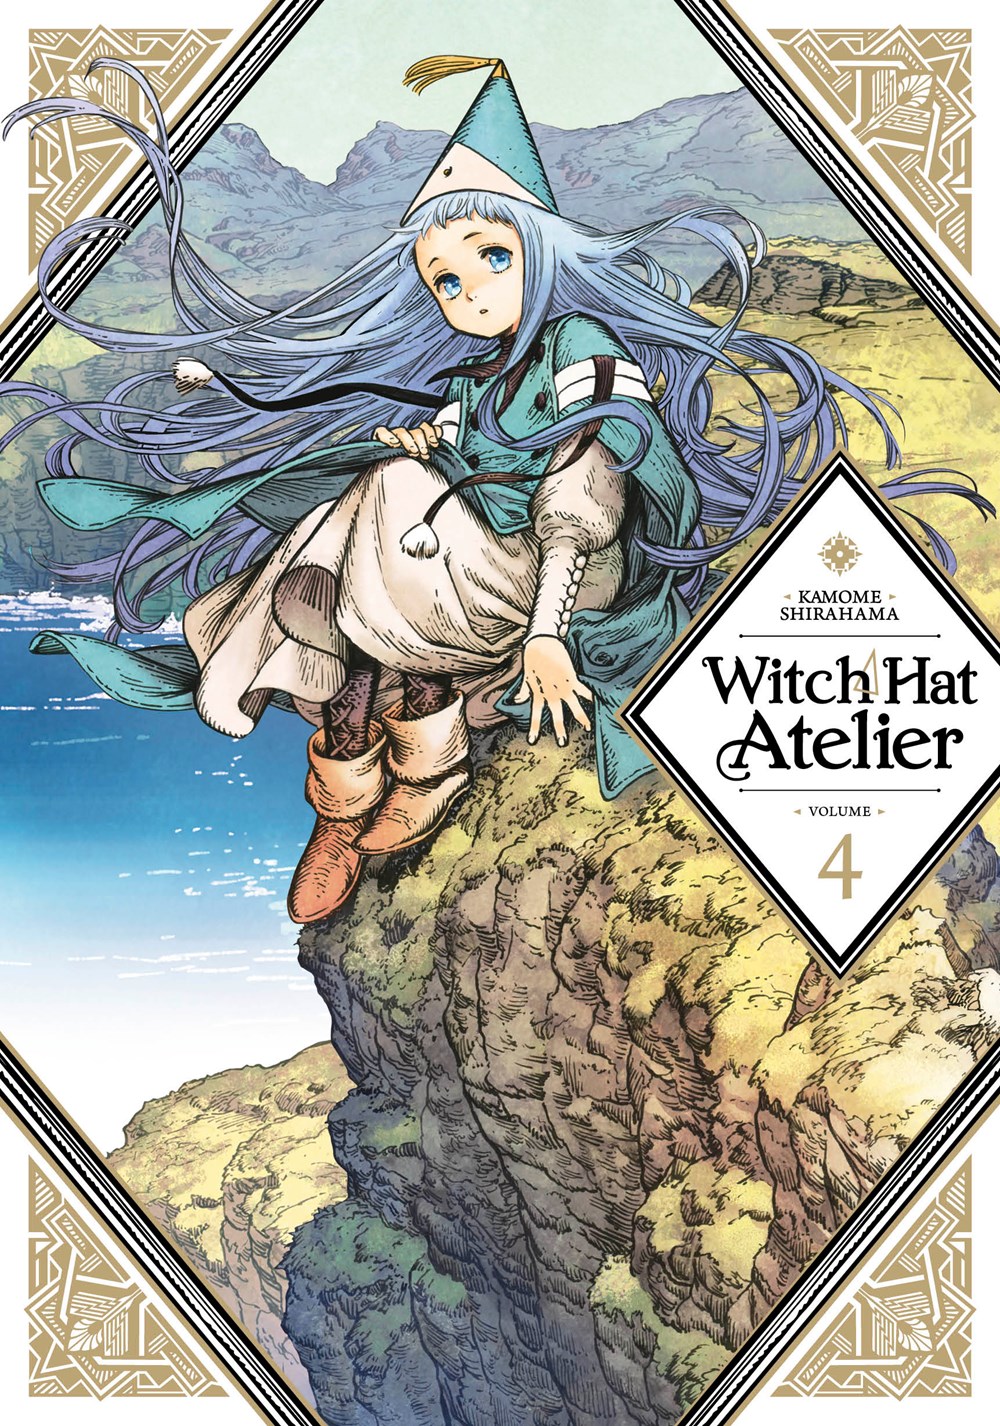 Witch Hat Atelier Vol. 4 by Kamome Shirahama {Manga Review}hryabookblog